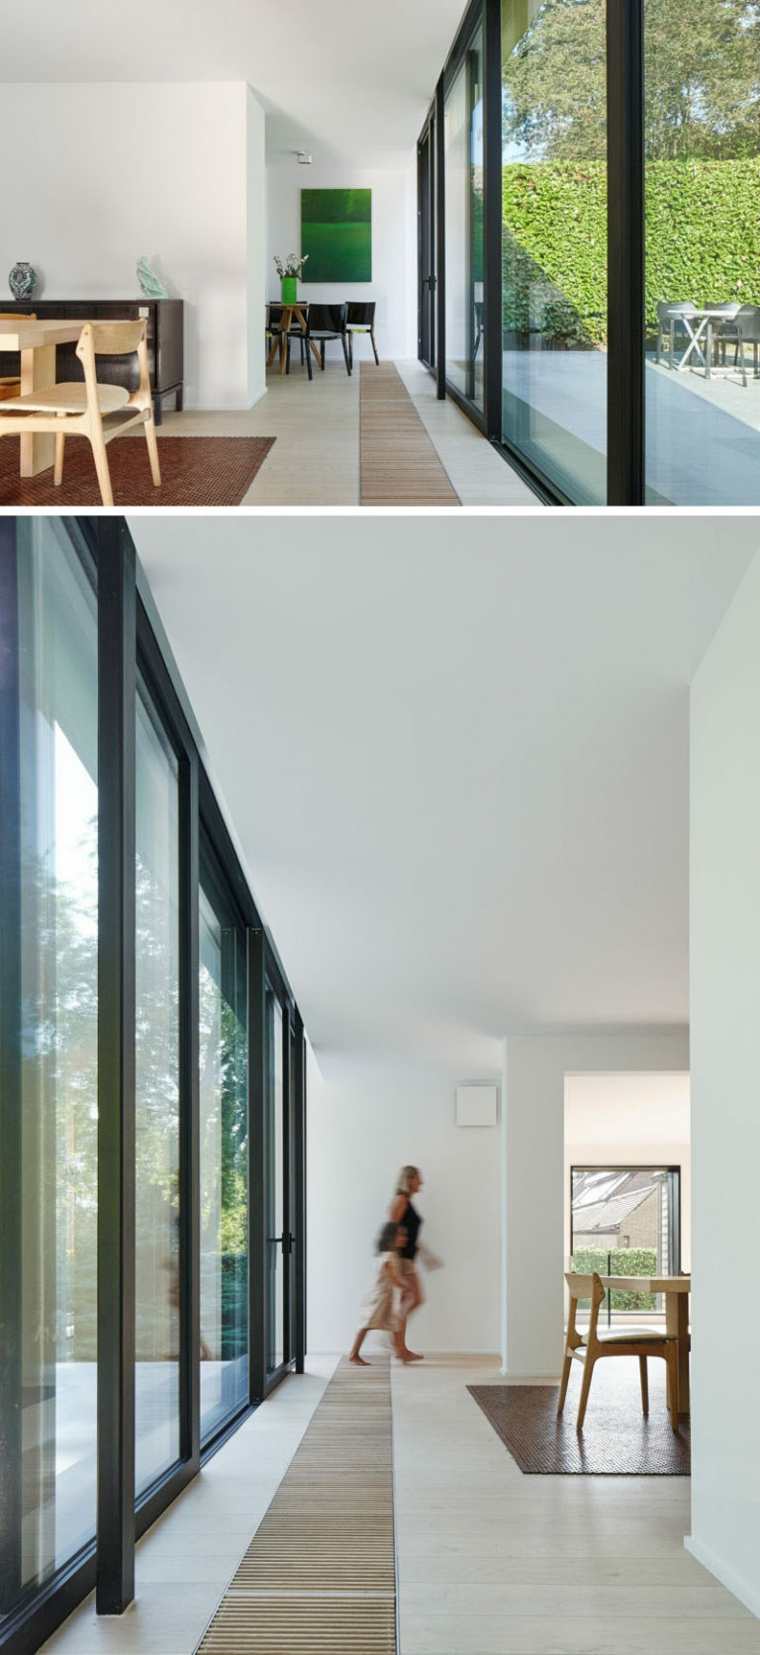 renover une maison revetement sol facade vitree terrasse moderne